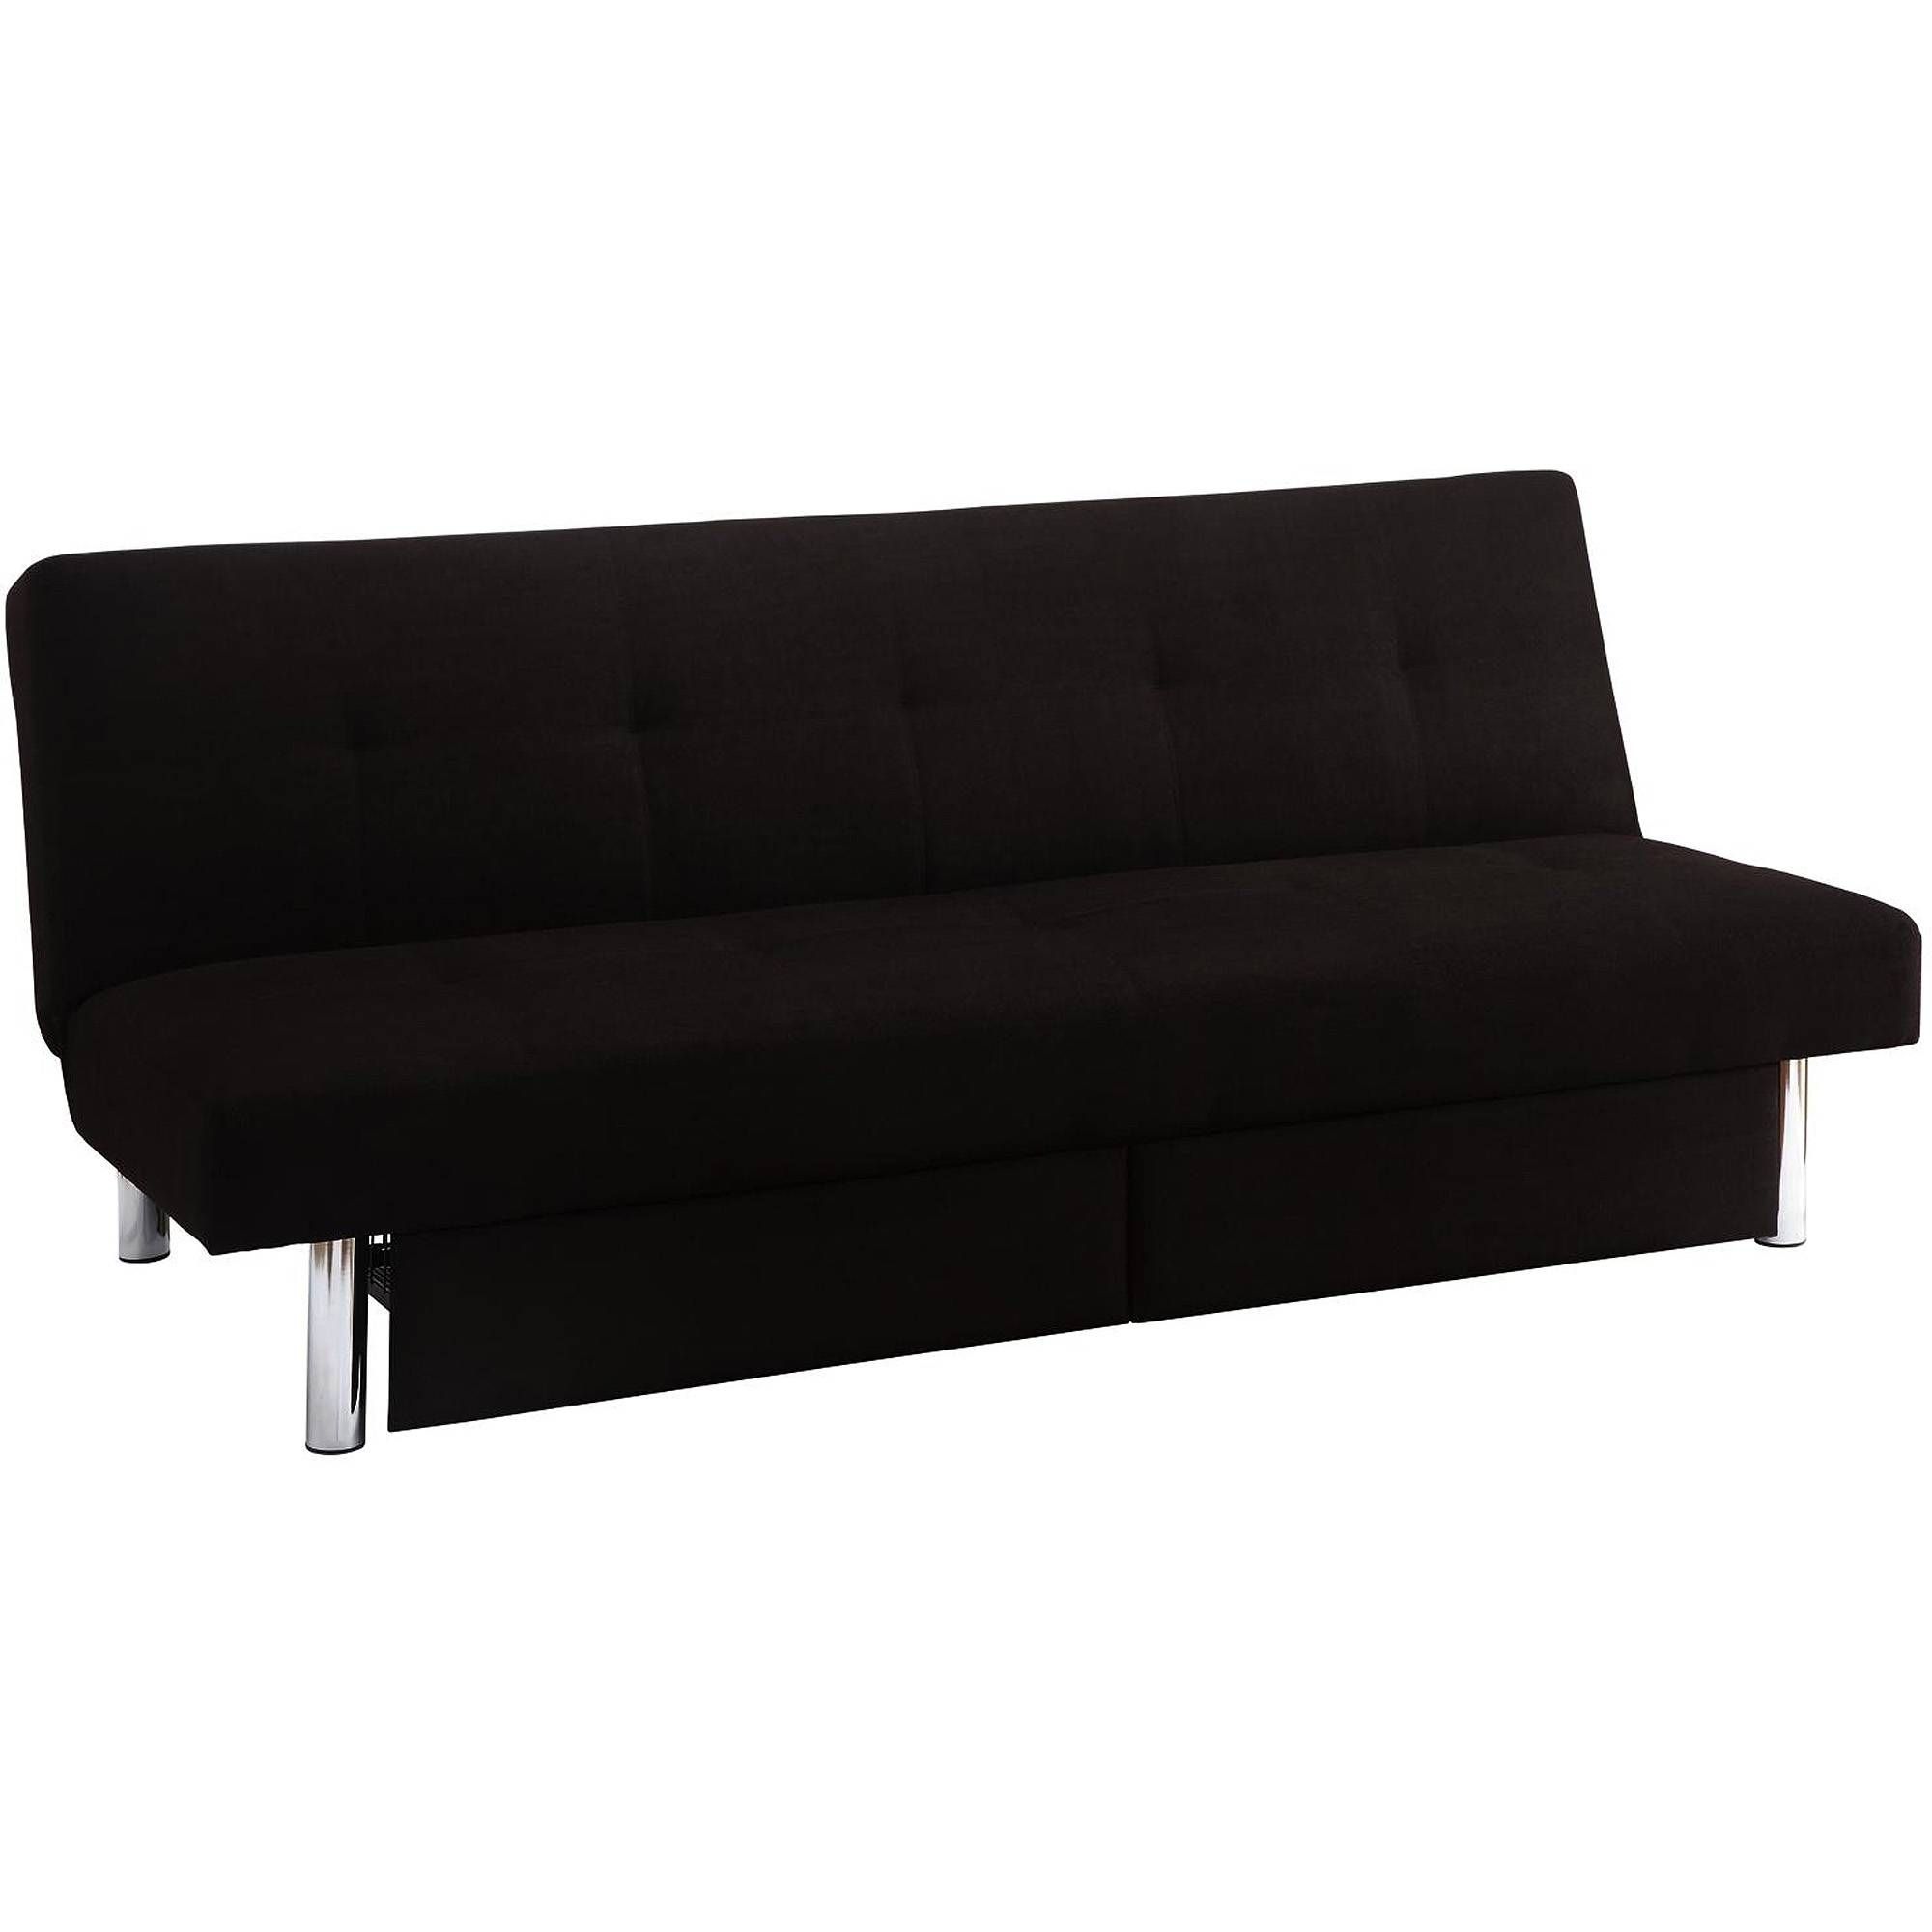 Sofa: Kebo Futon Sofa Bed | Sofas At Target | Walmart Sofa Bed With Regard To Kebo Futon Sofas (View 11 of 15)